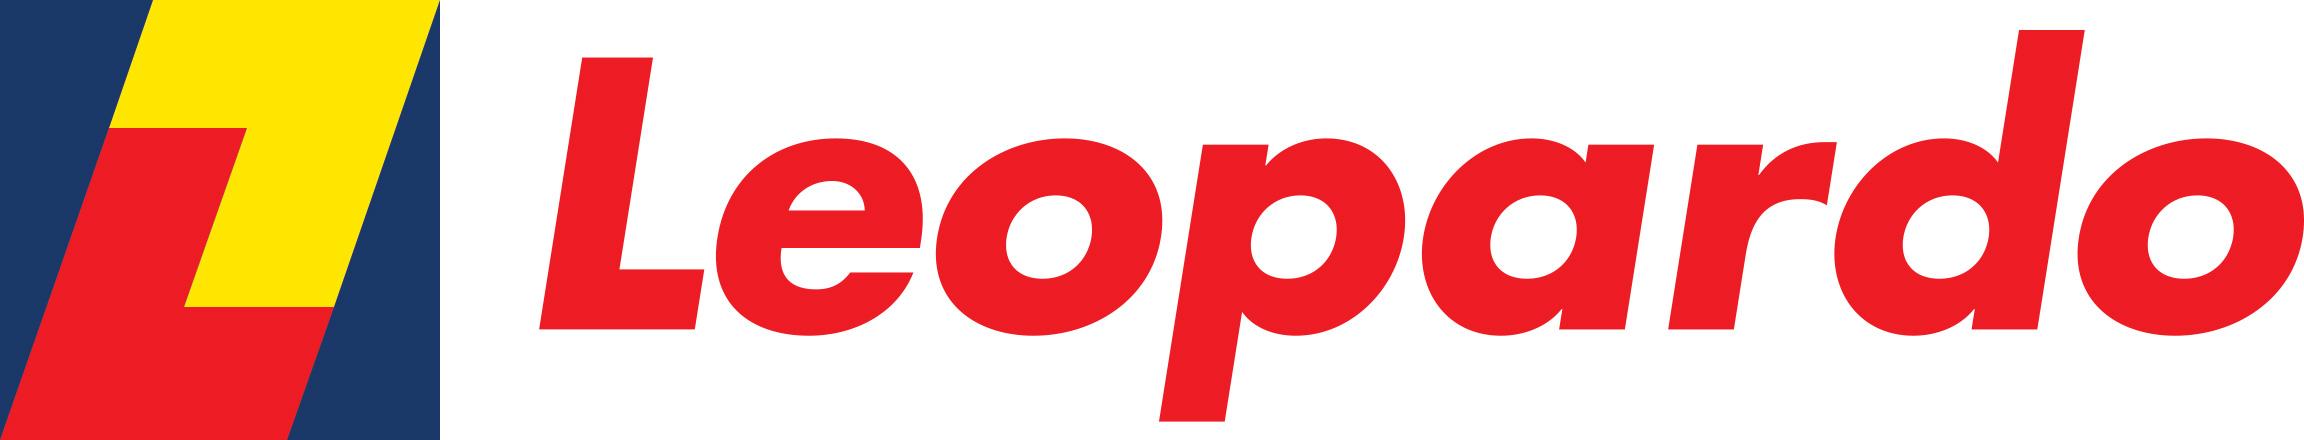 Home Improvement Company Logo - Leopardo Companies